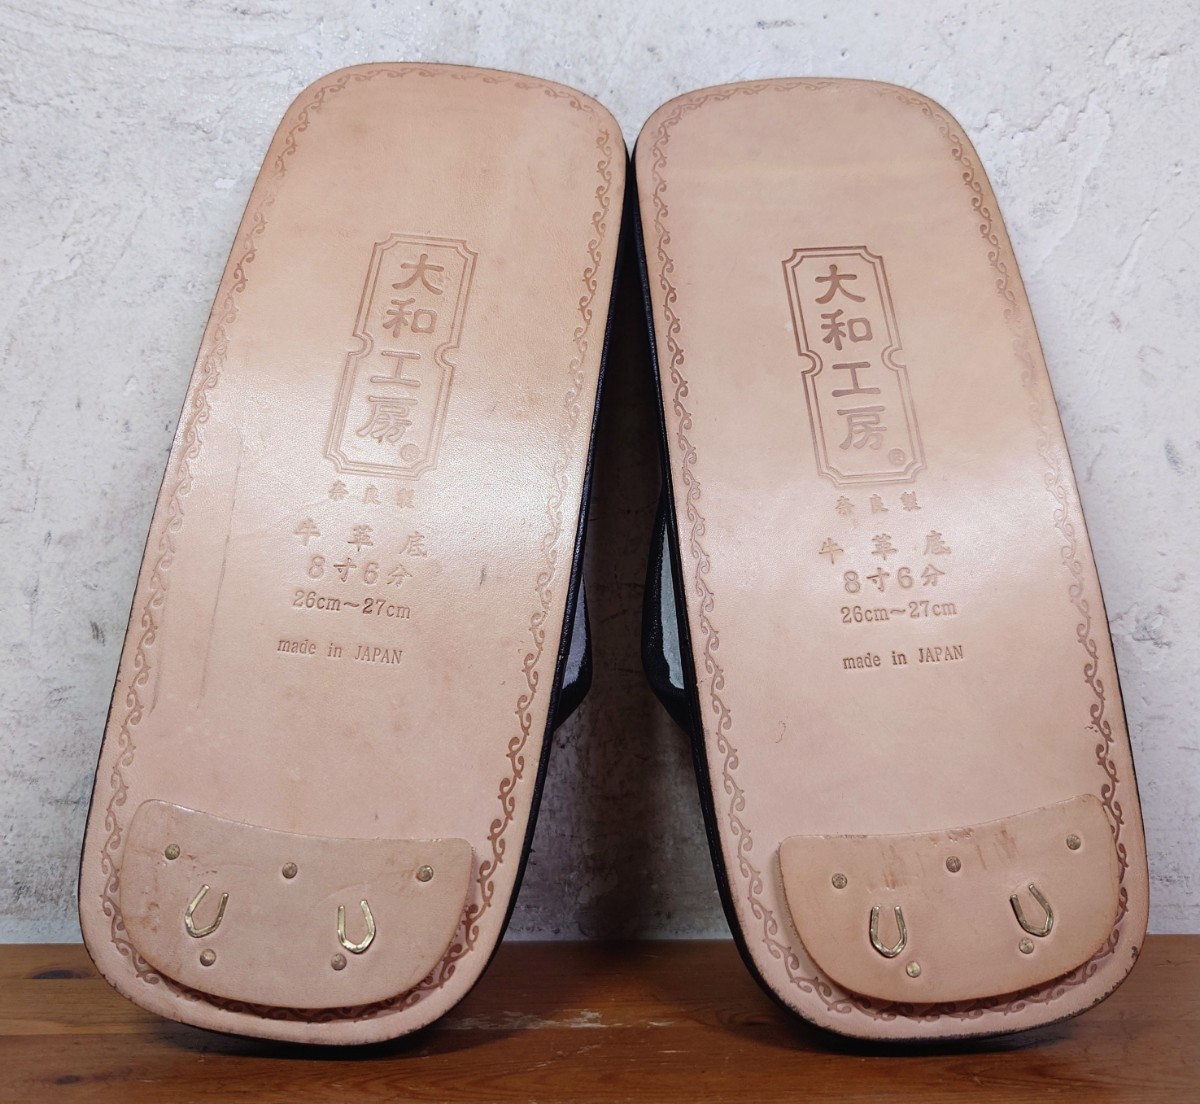 [ unused / free shipping ] made in Japan Yamato atelier Tochigi leather sandals setta seta8 size 6 minute 26-26.5cm corresponding sandals black /hender scheme junya watanebe liking .